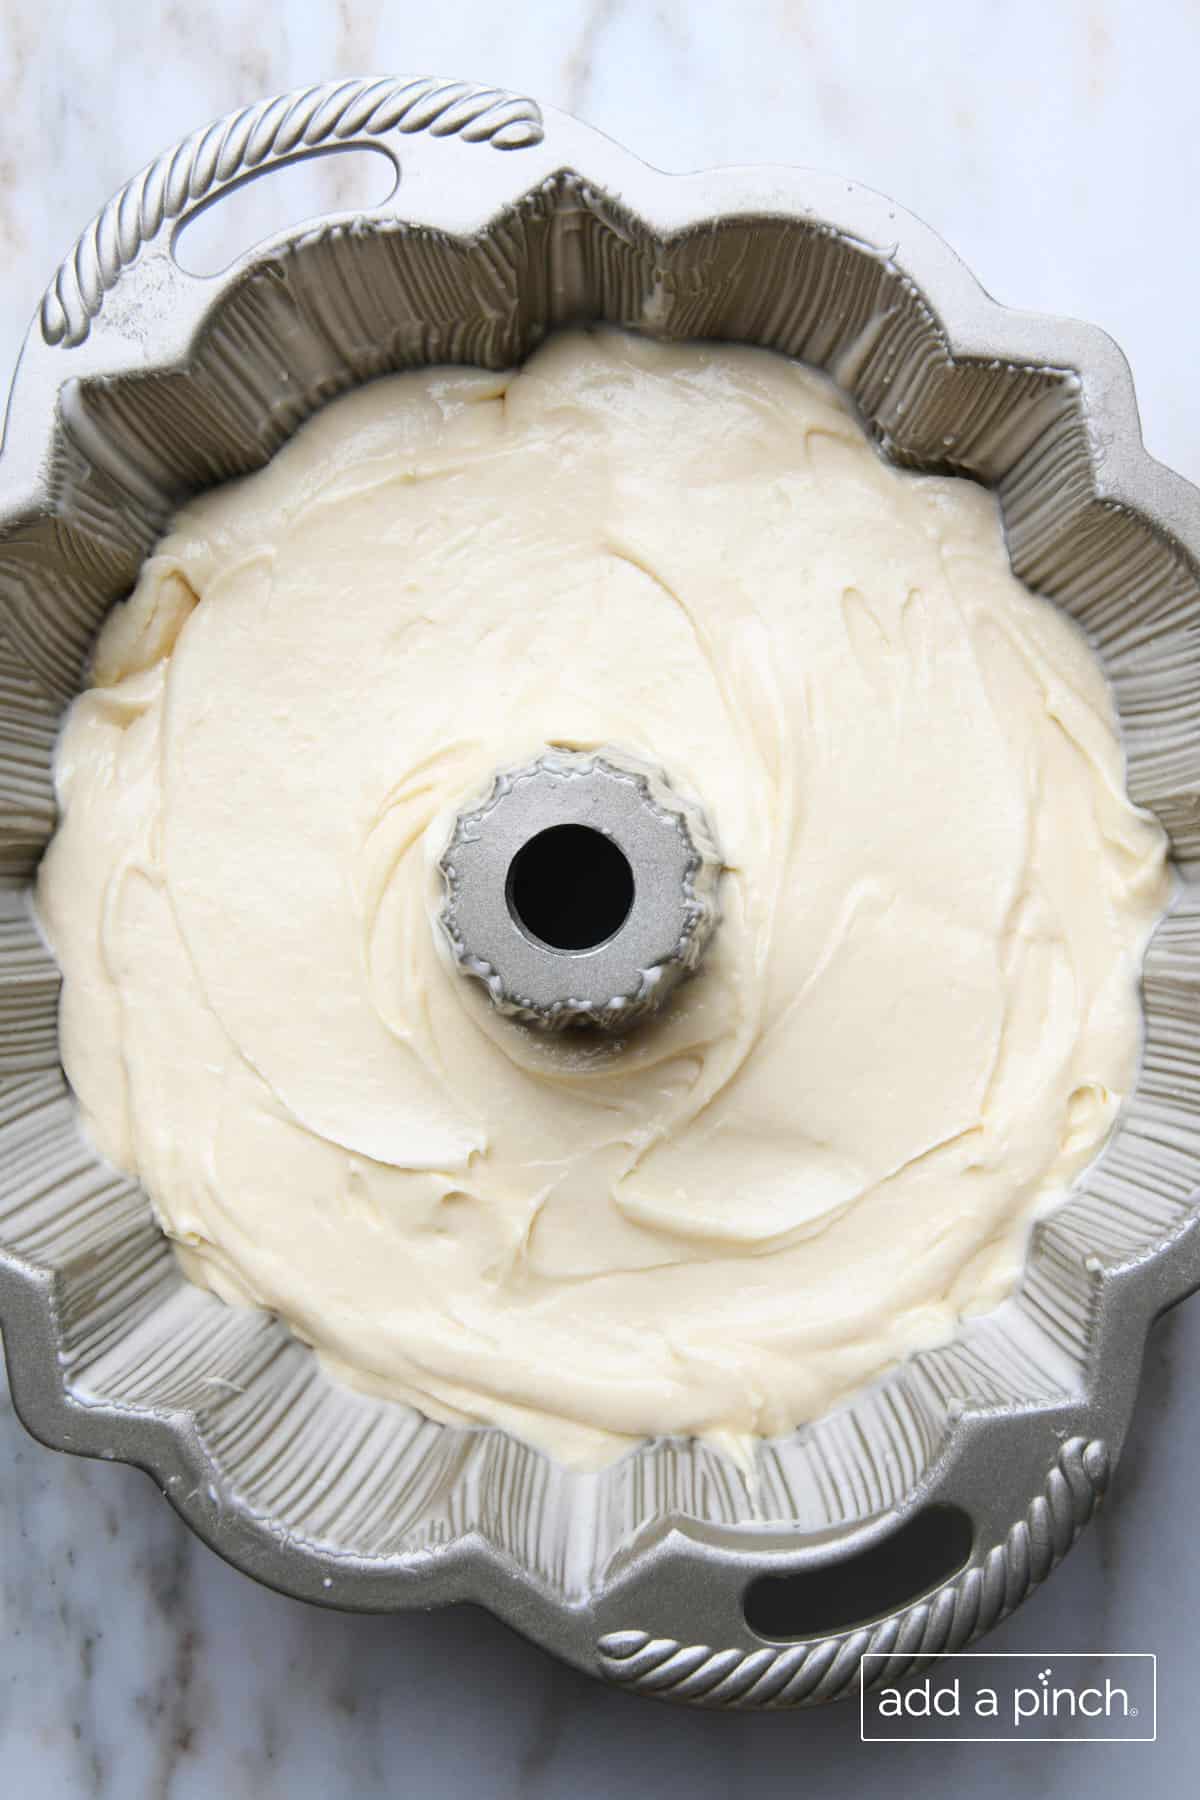 Bundt pan with handles holds cake batter. 